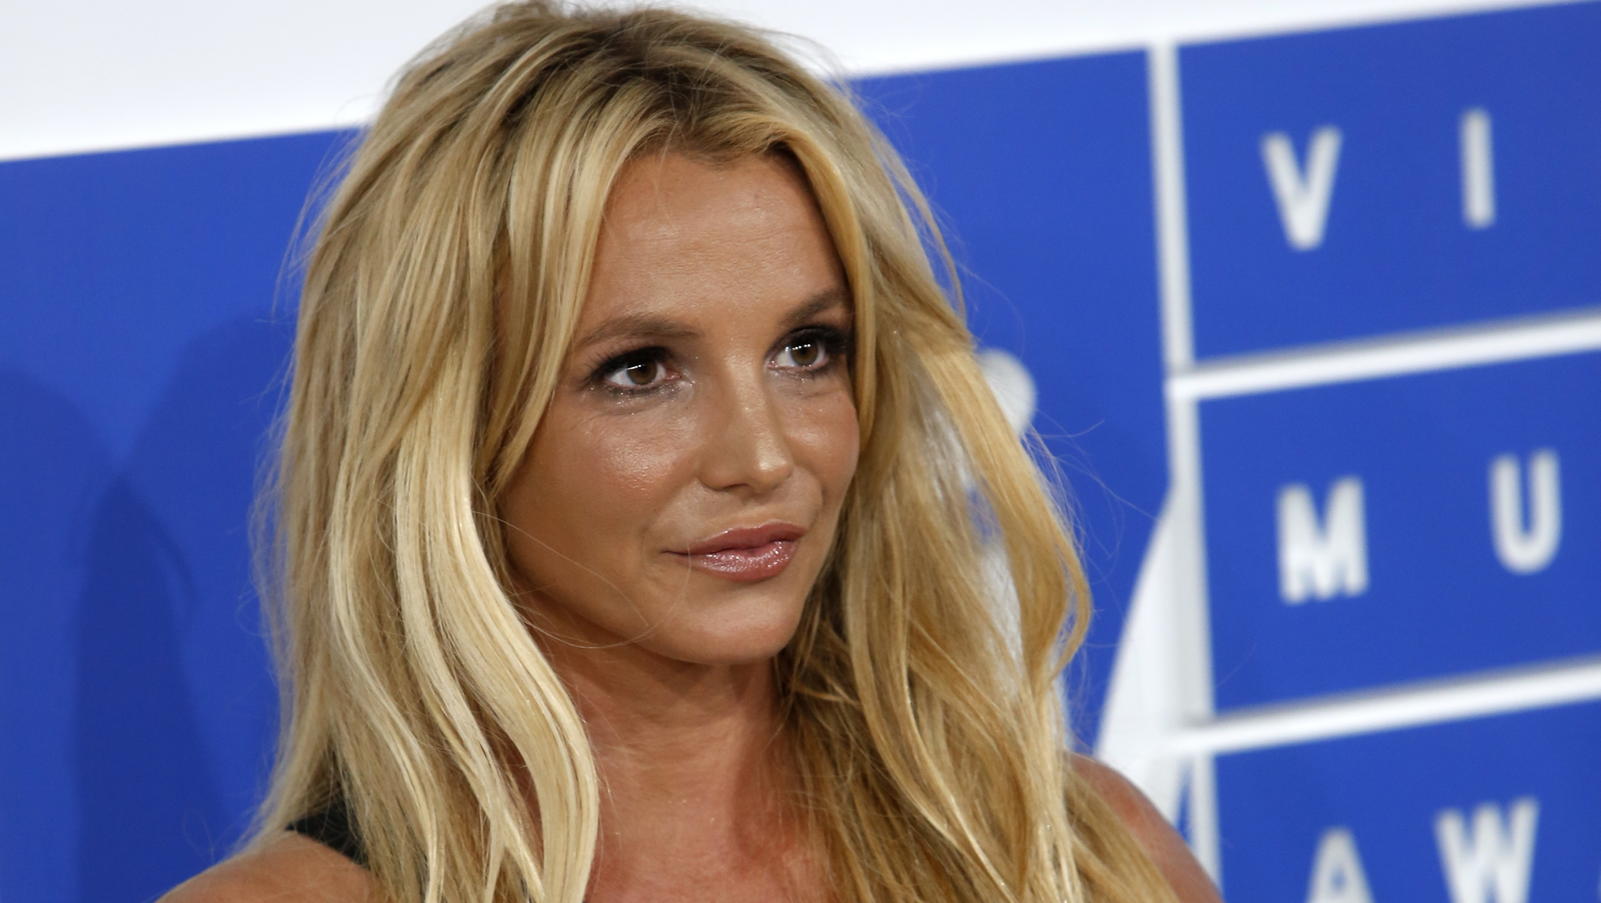 Singer Britney Spears attends the MTV Video Music Awards, VMAs, at Madison Square Garden in New York City, USA, on 28 August 2016. Photo: Hubert Boesl/dpa | Verwendung weltweit